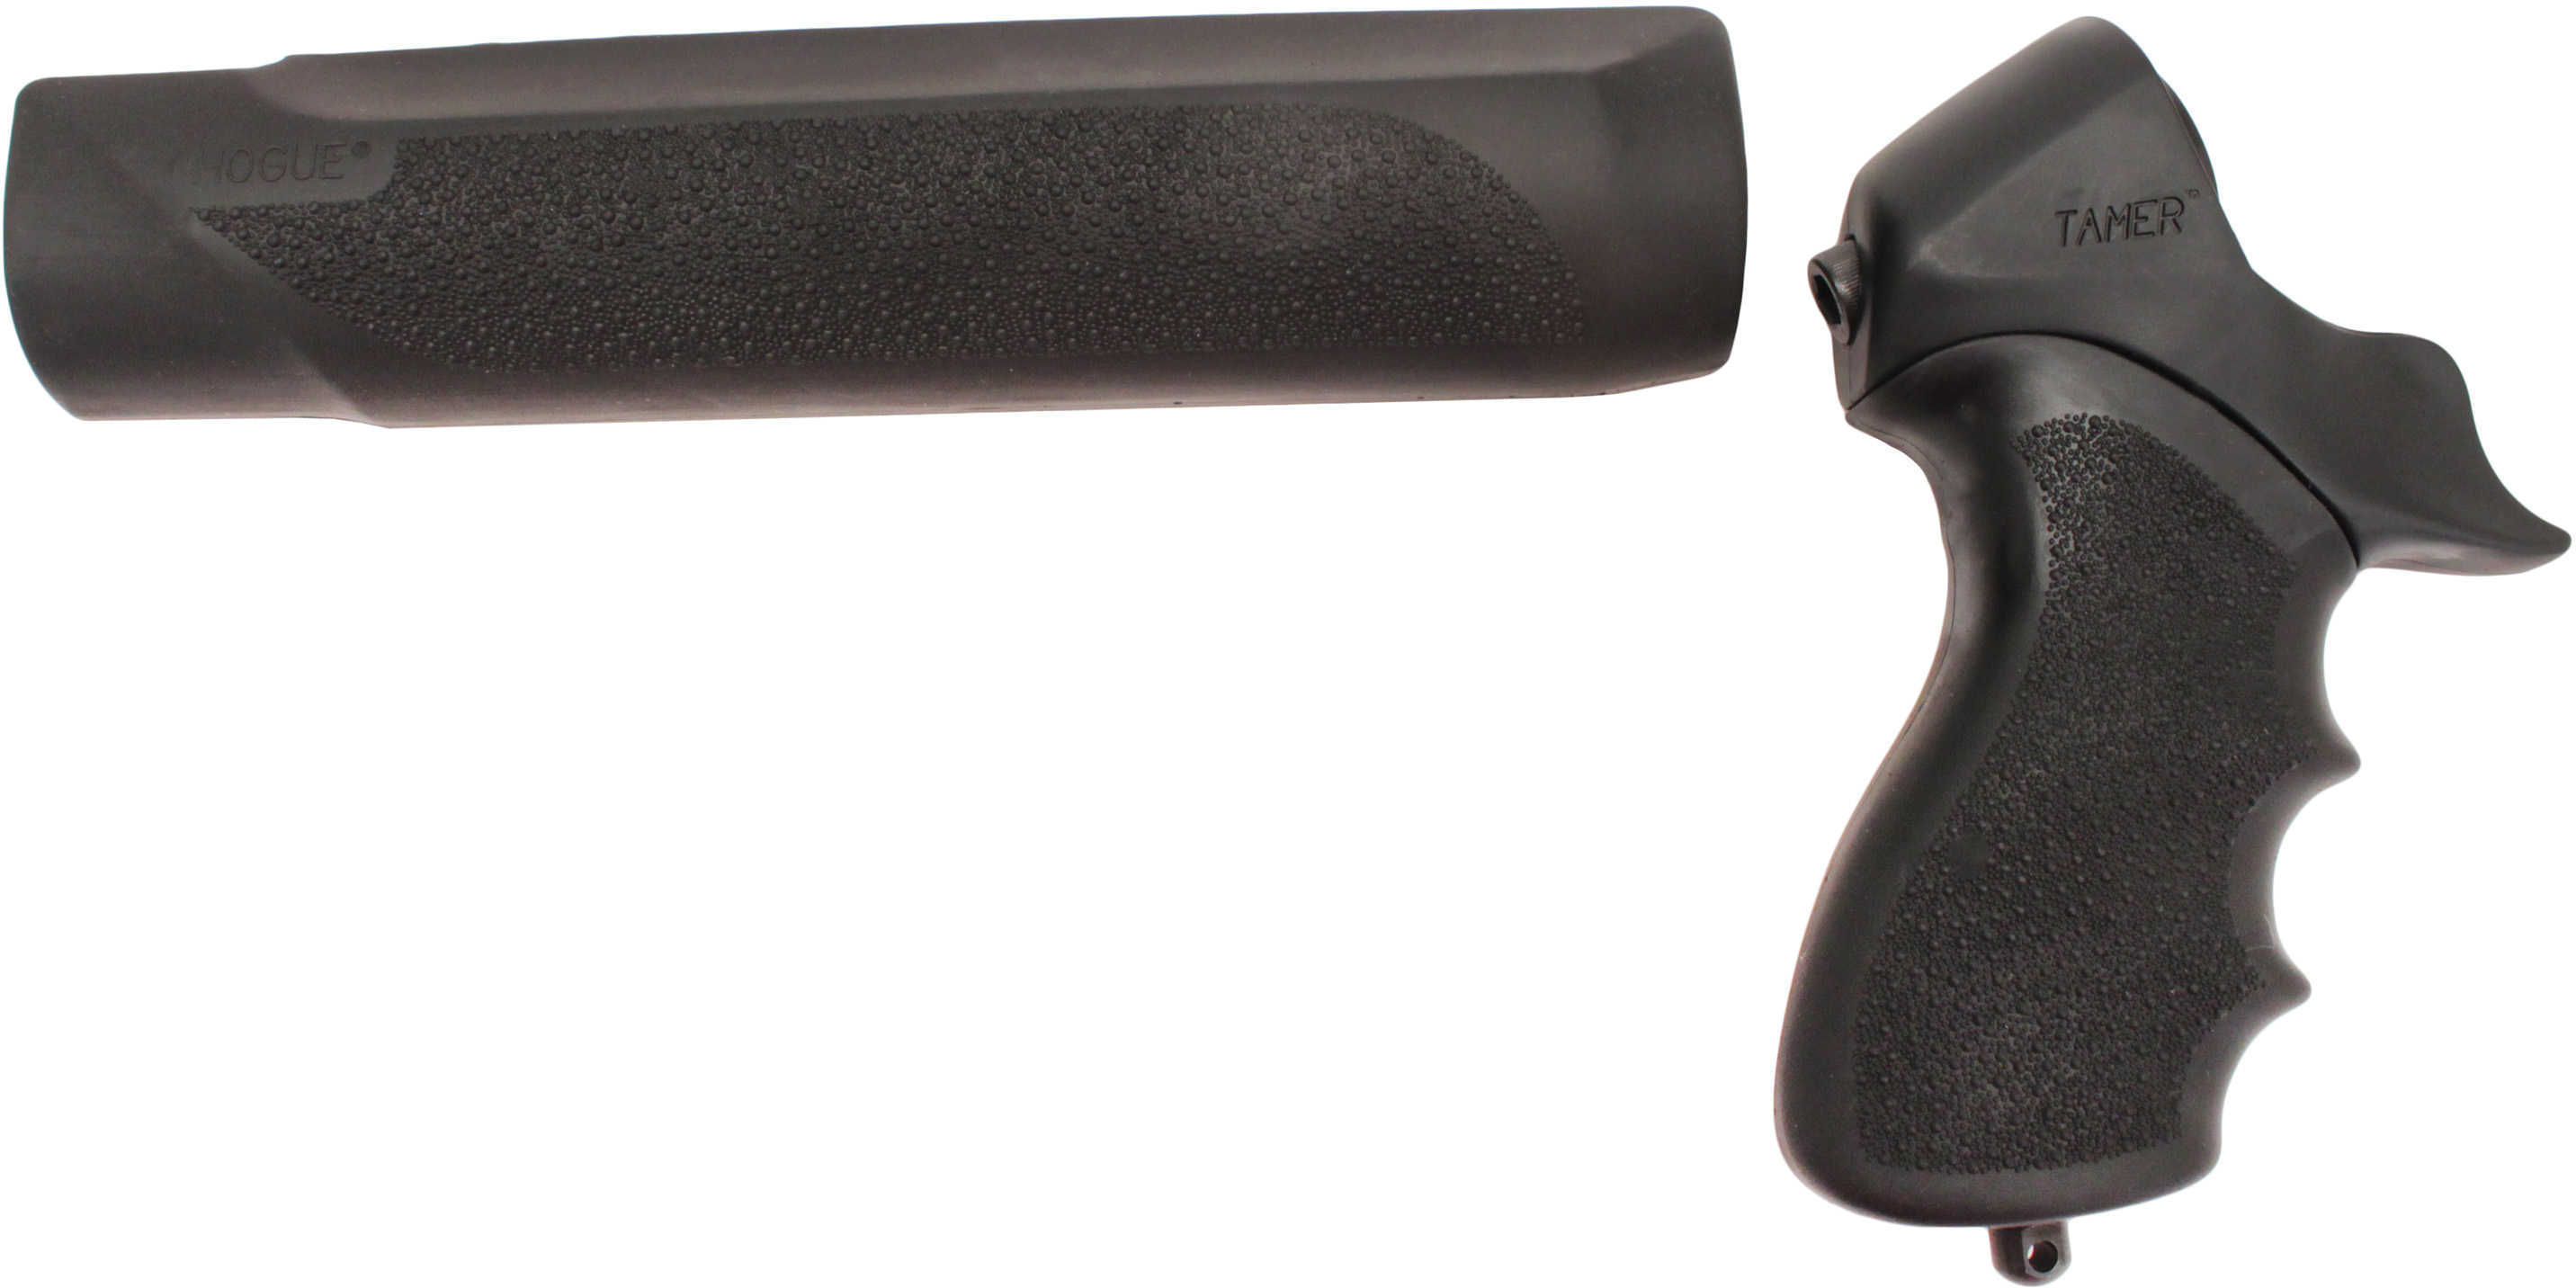 Hogue Pistol Grip W/Forend Mossberg 500 12 Gauge Black